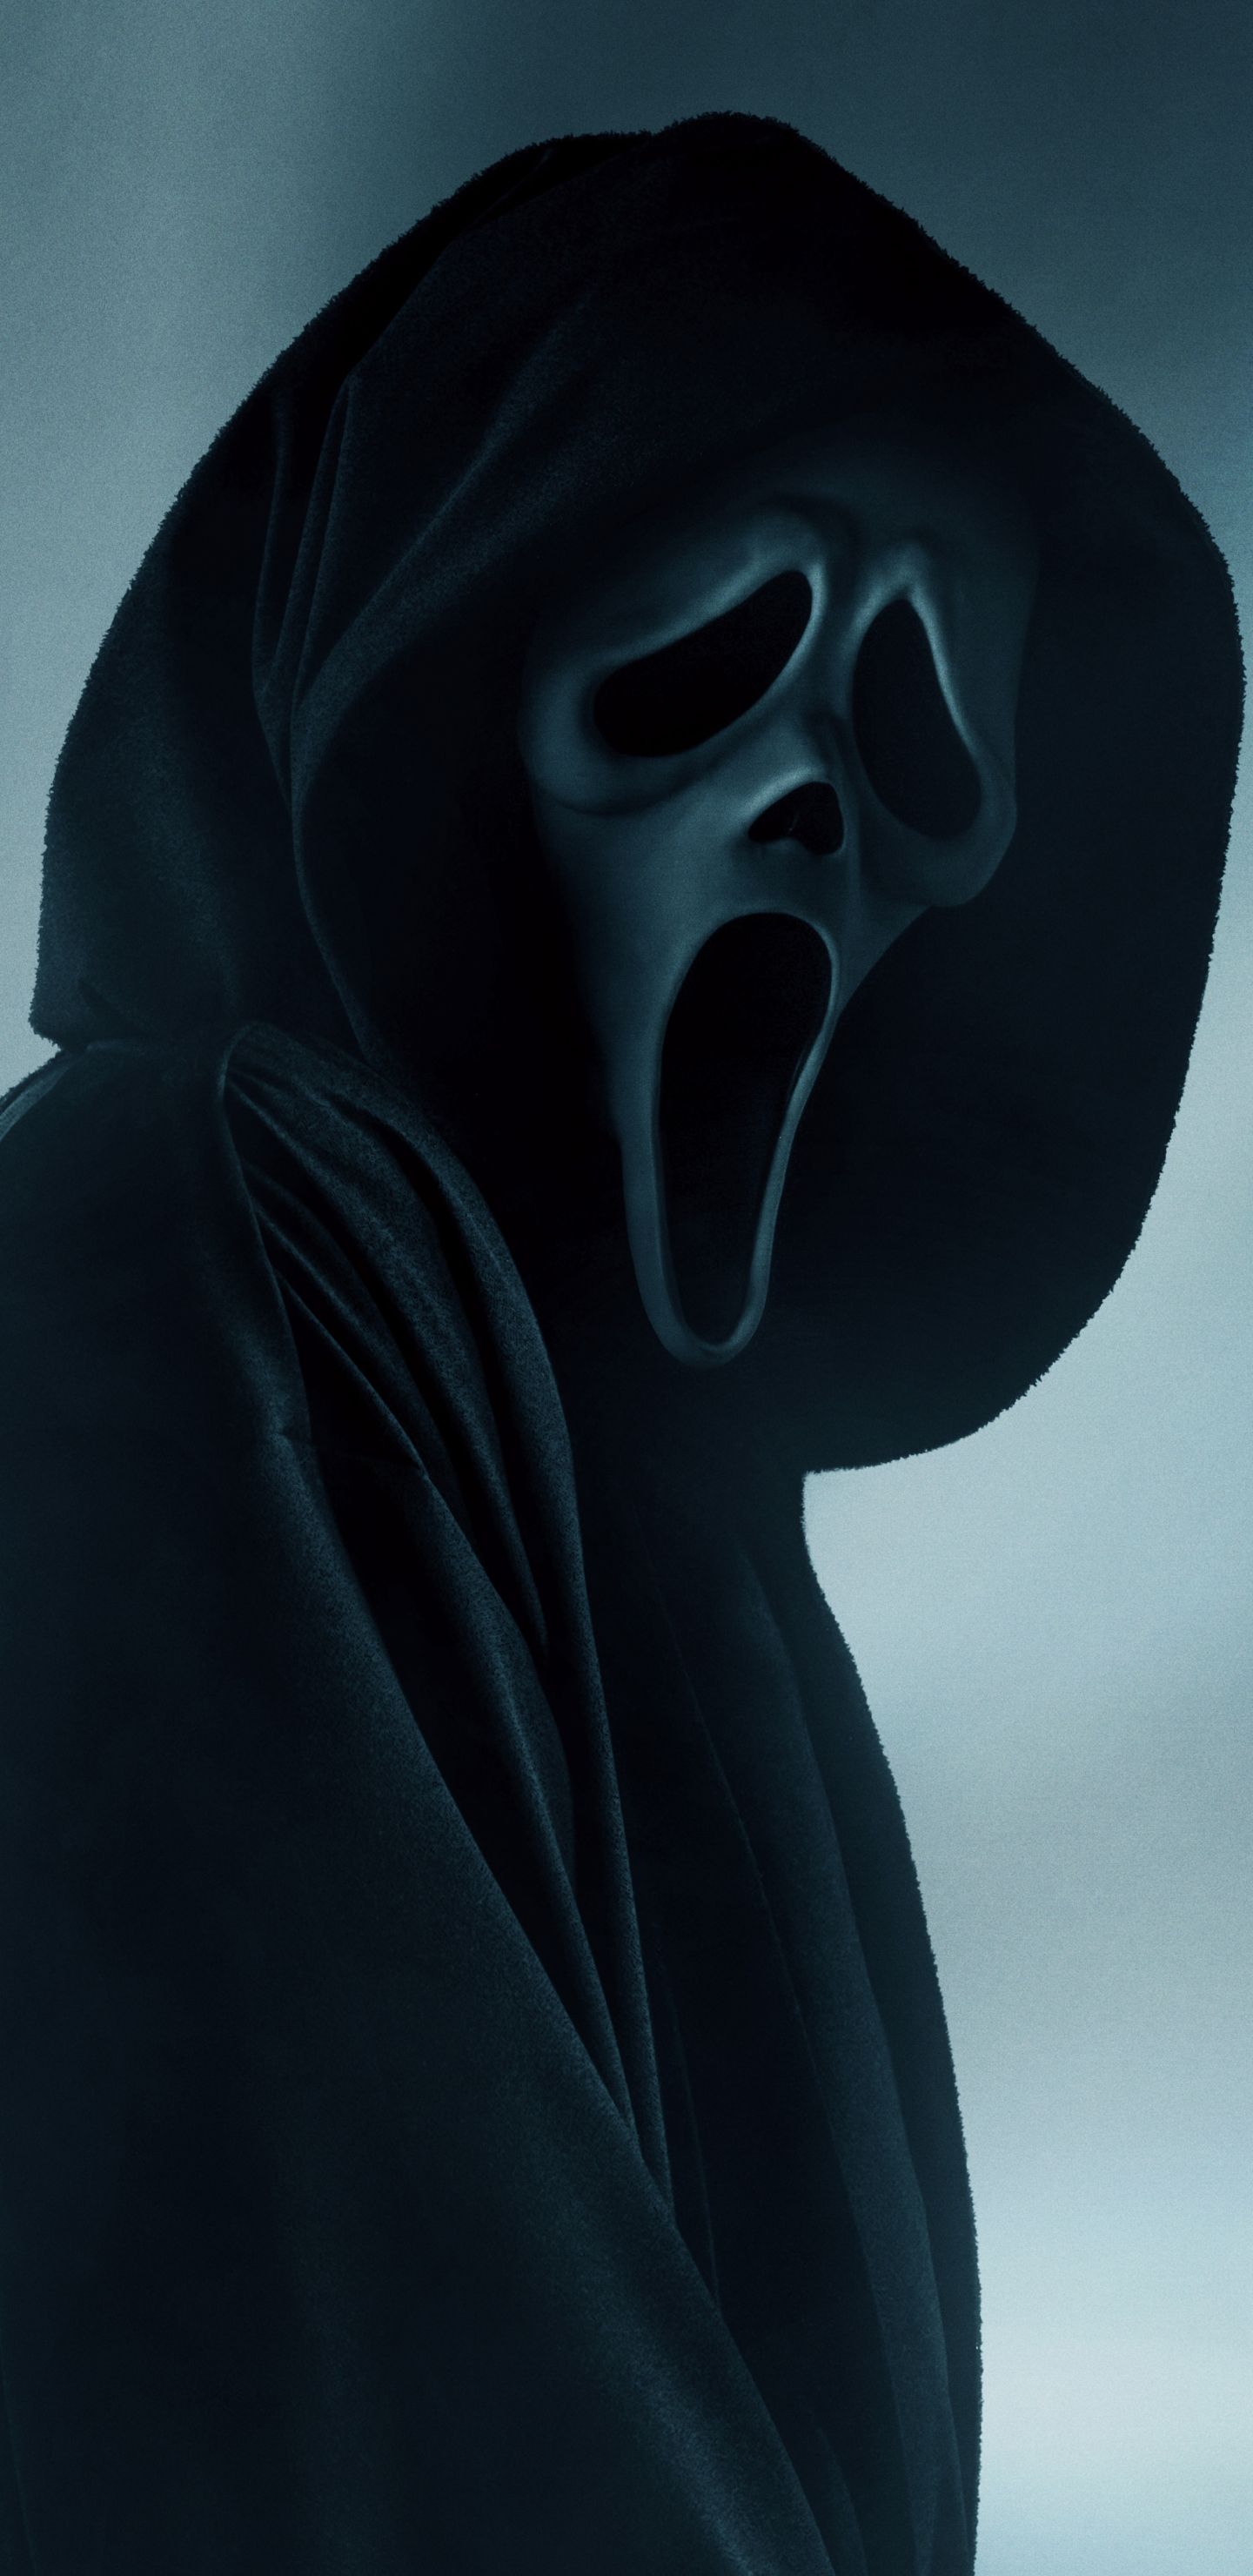 Download Ghostface (Scream) wallpaper for mobile phone, free Ghostface ( Scream) HD picture